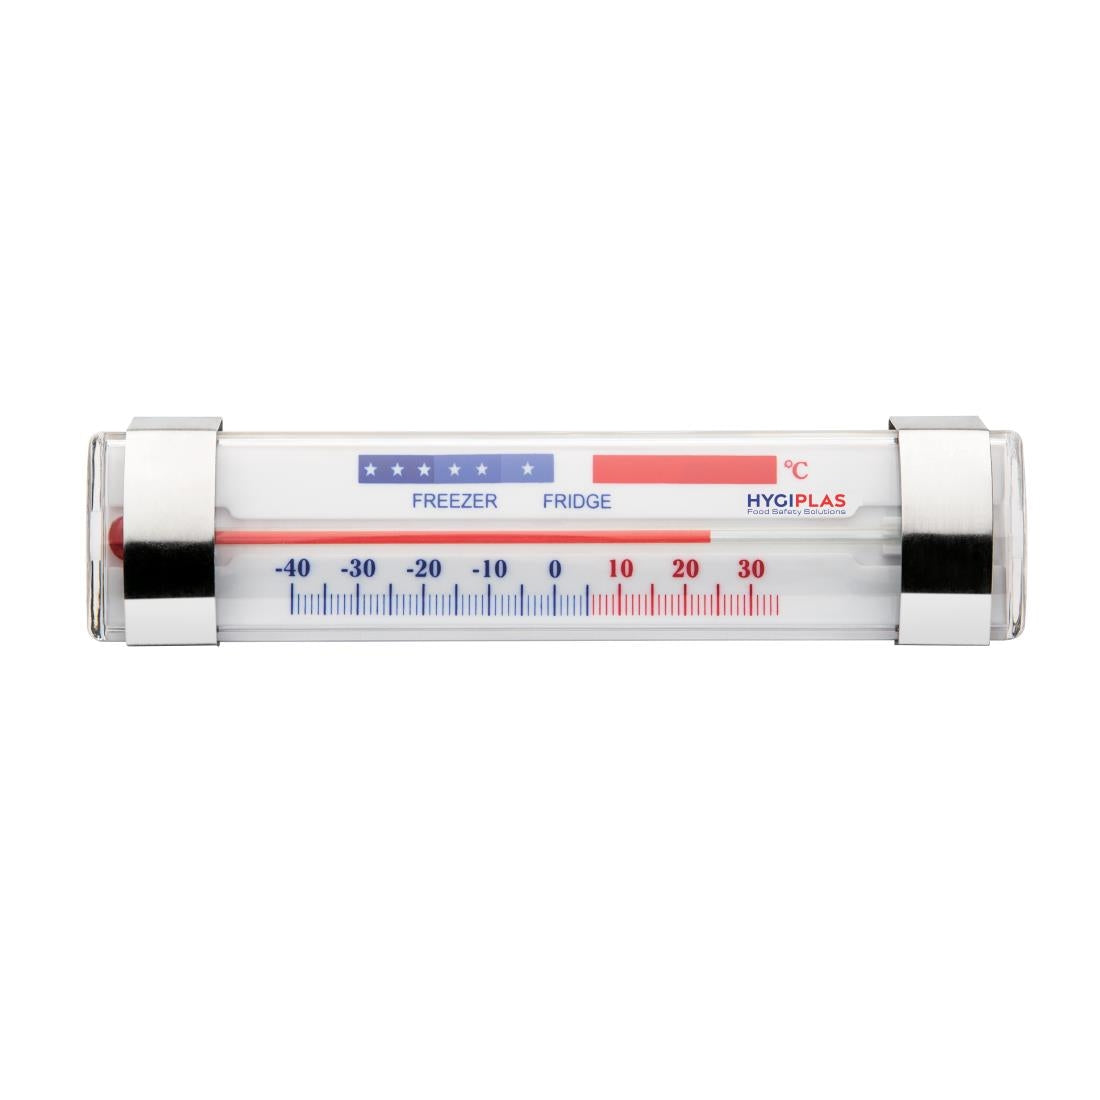 Hygiplas Fridge Freezer Thermometer JD Catering Equipment Solutions Ltd